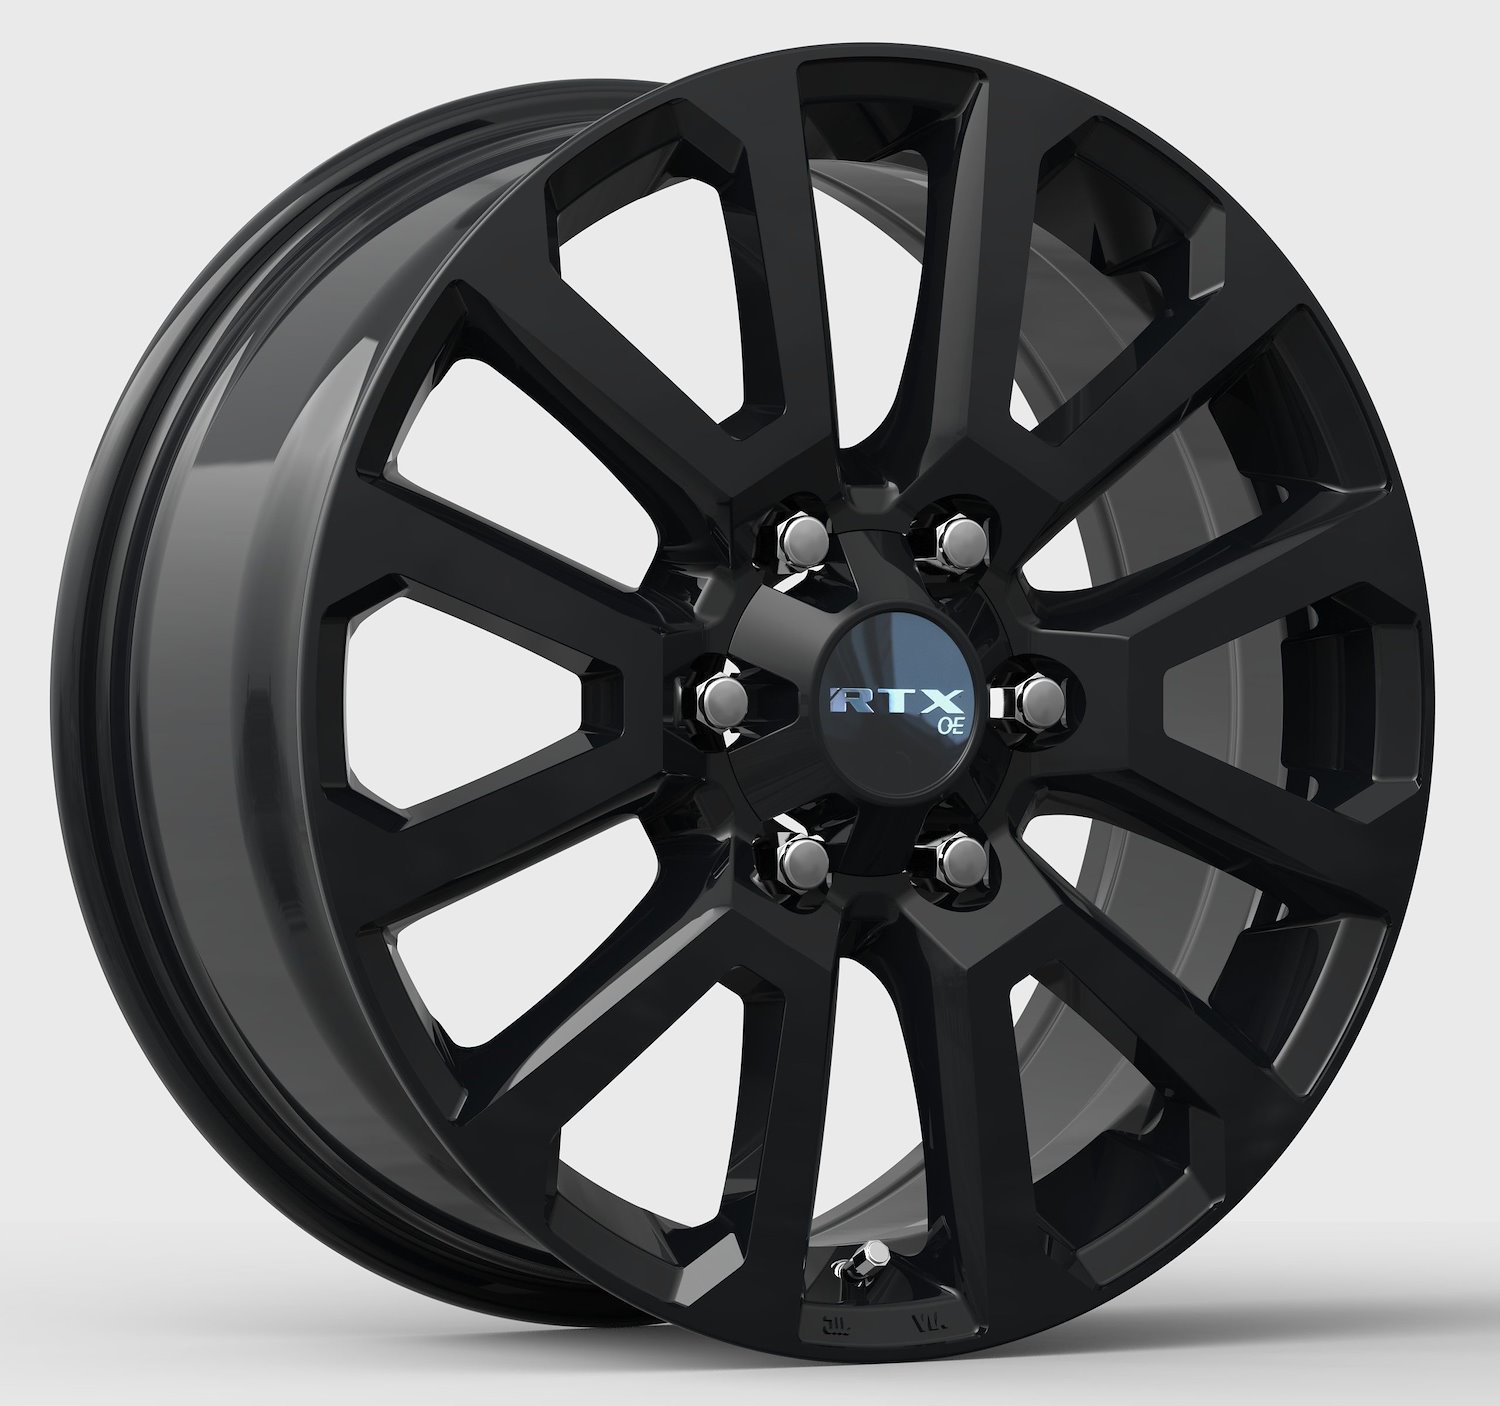 083261 OE-Series NI-01 Wheel [Size: 17" x 7.50"] Gloss Black Finish